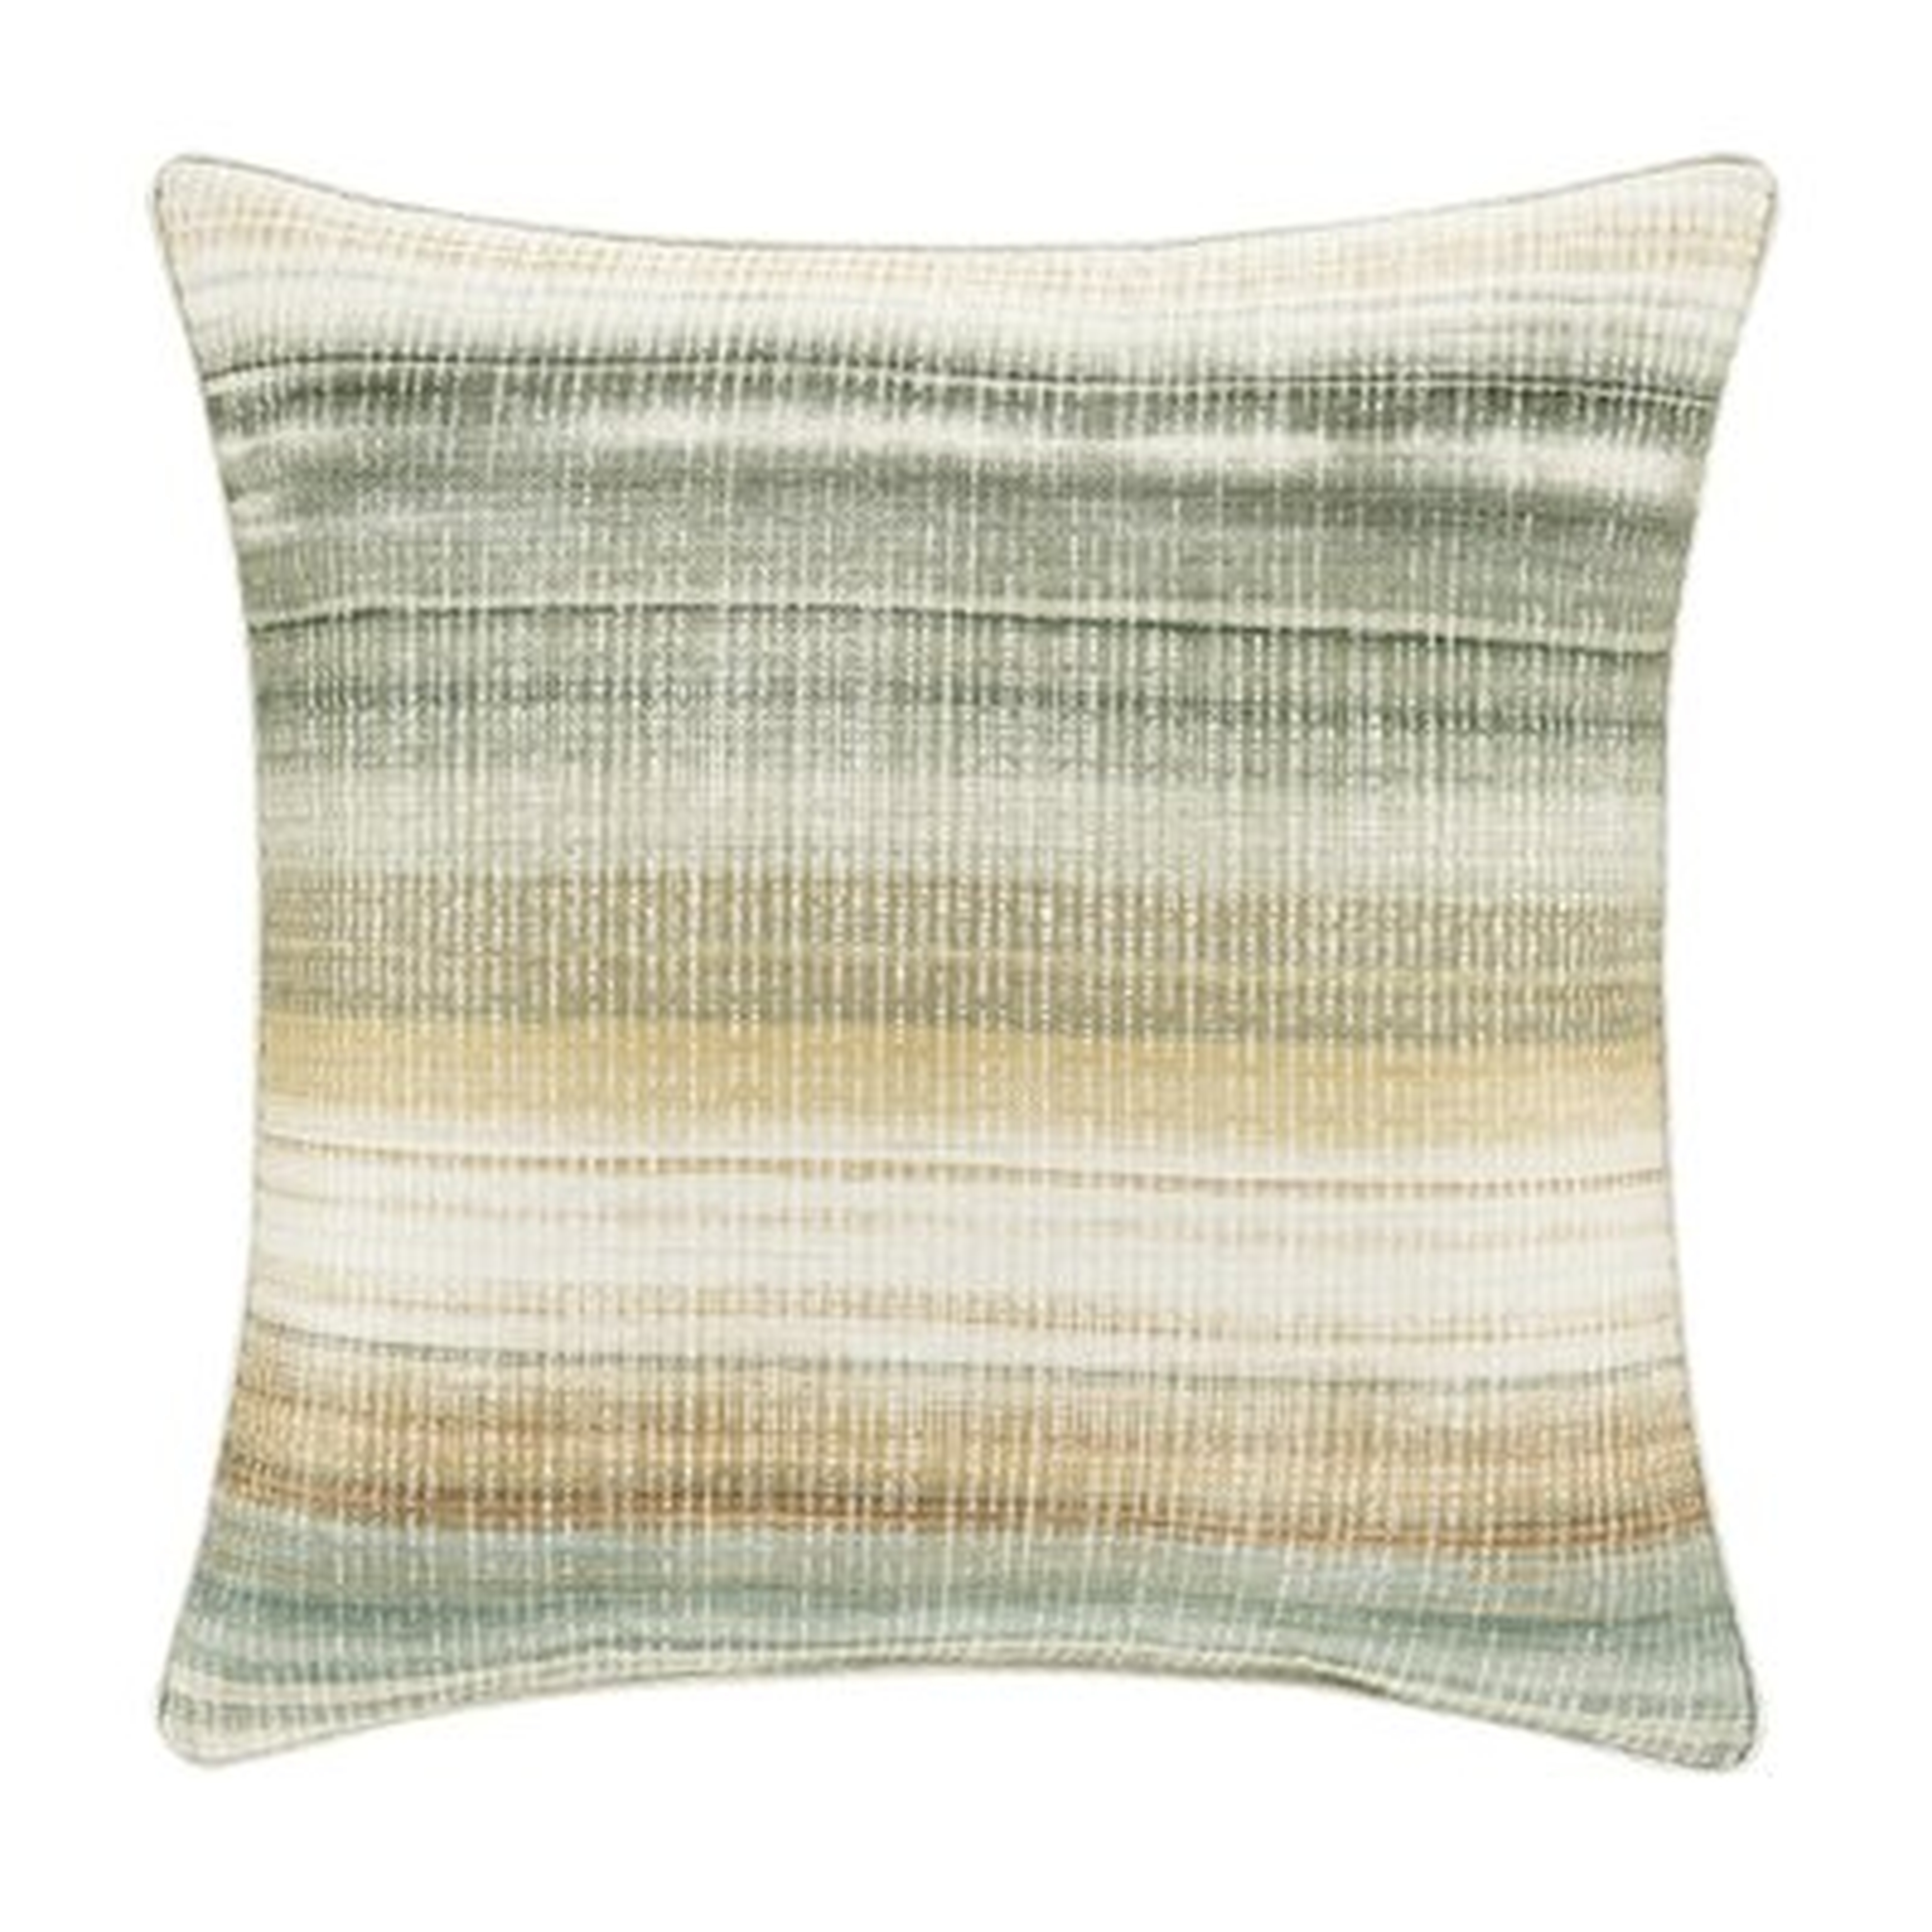 Avent Boudoir Decorative Throw Pillow Green in , 18" x 18" - Wayfair